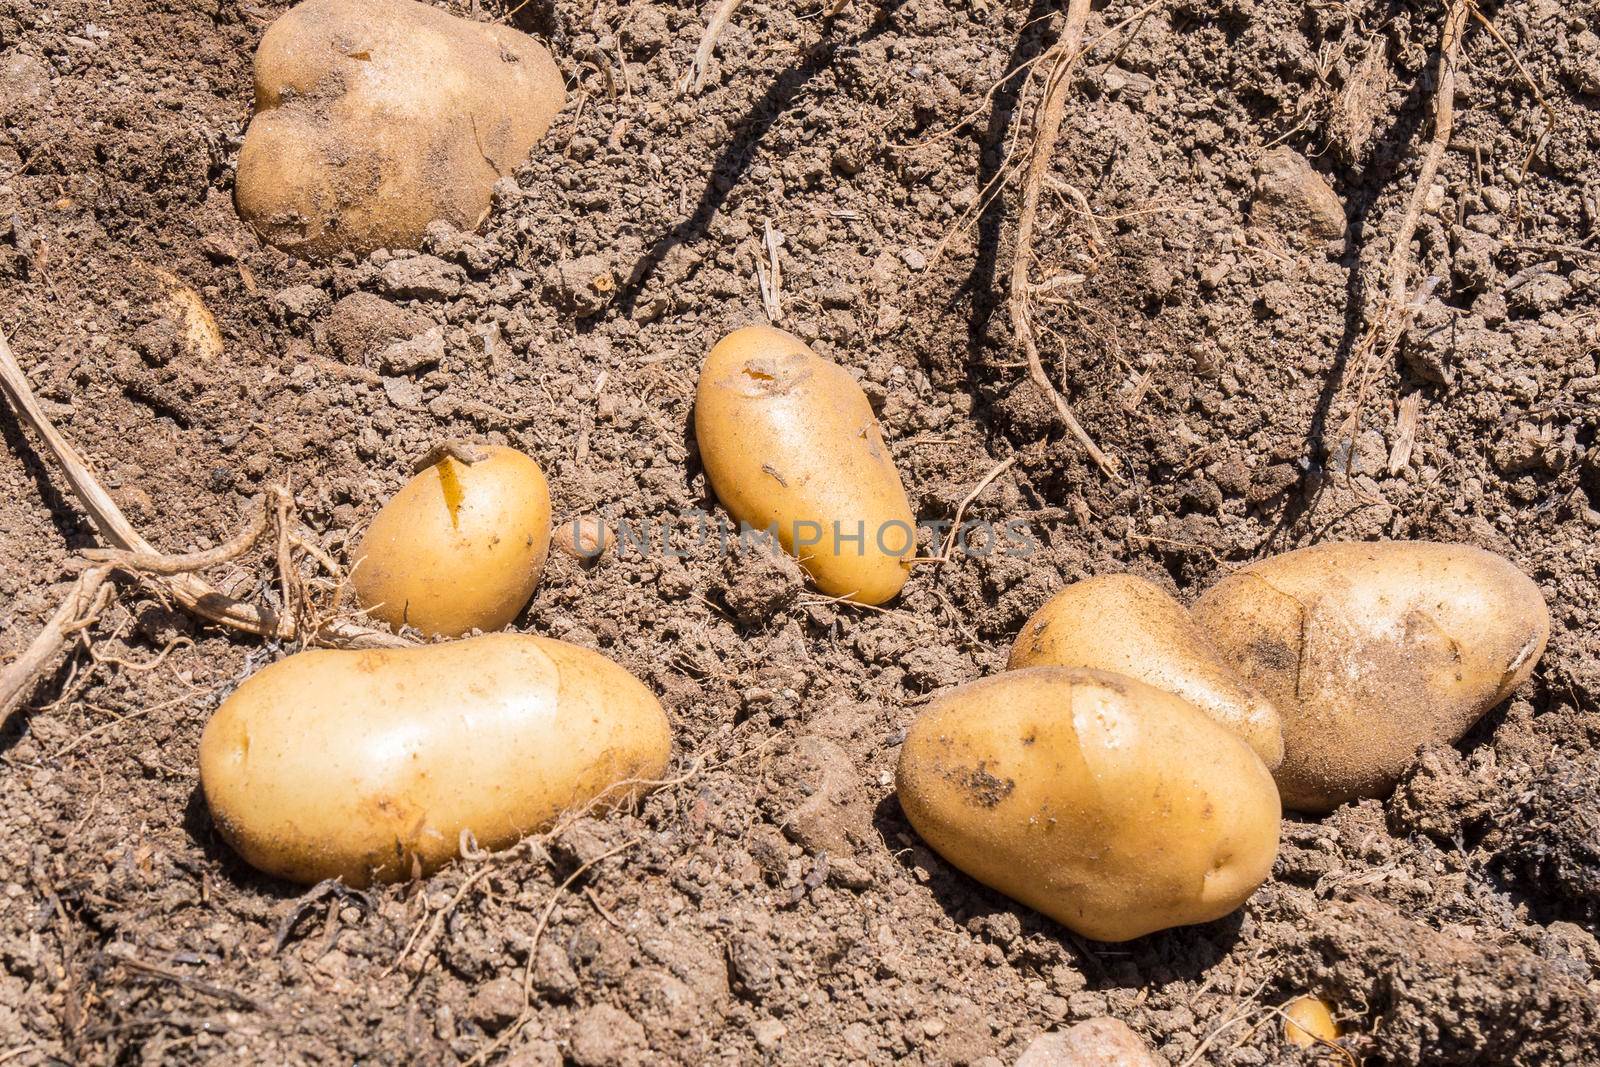 Harvesting the potato crop still on the ground.